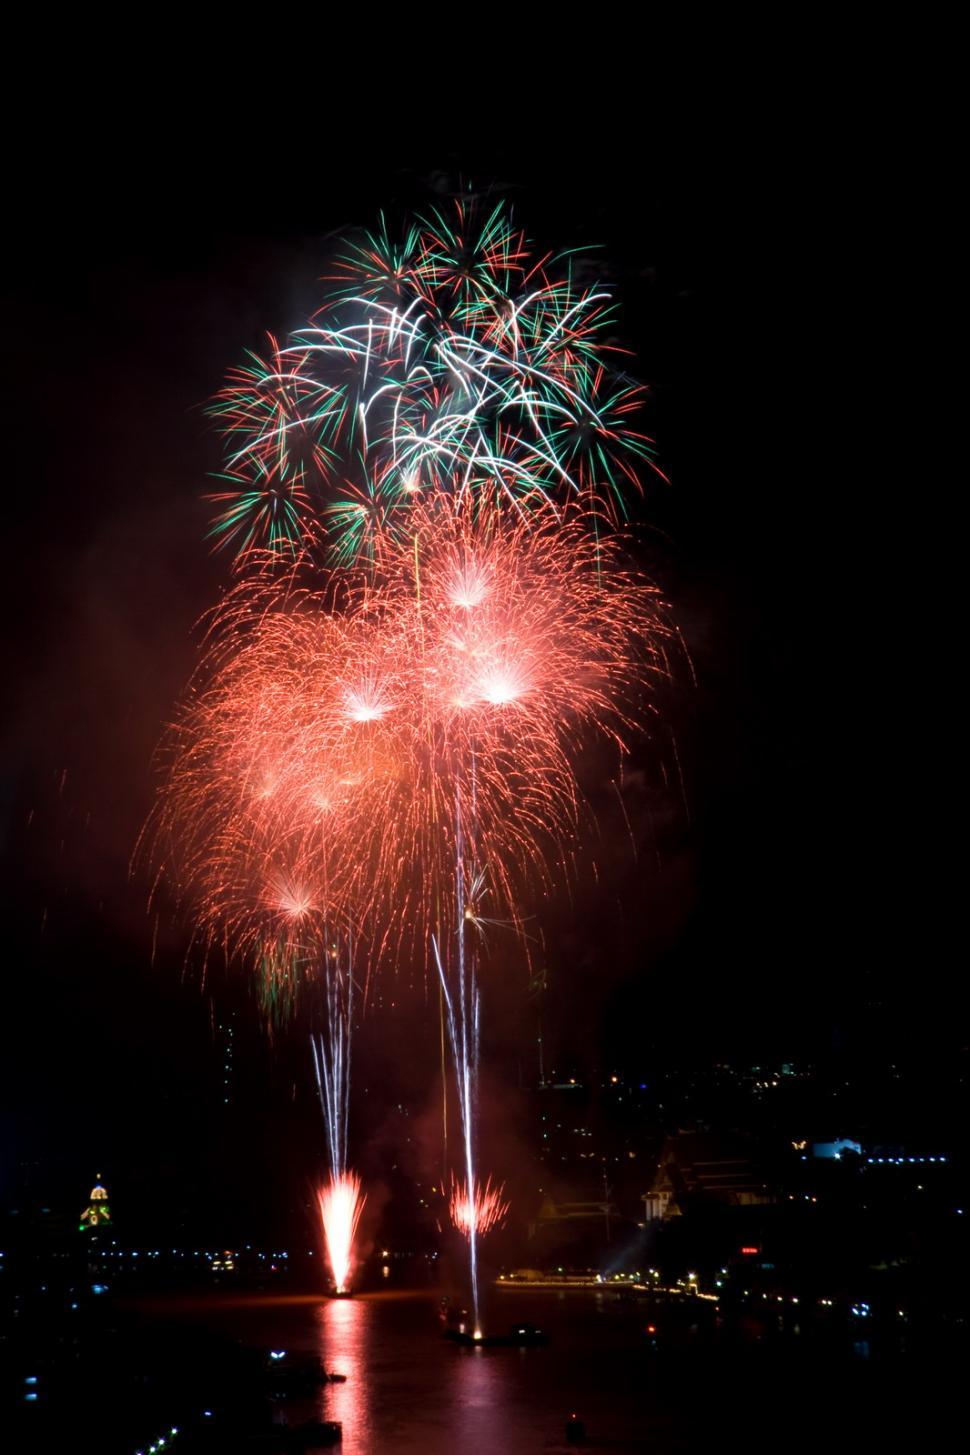 Free Image of Fireworks Illuminate the Night Sky 